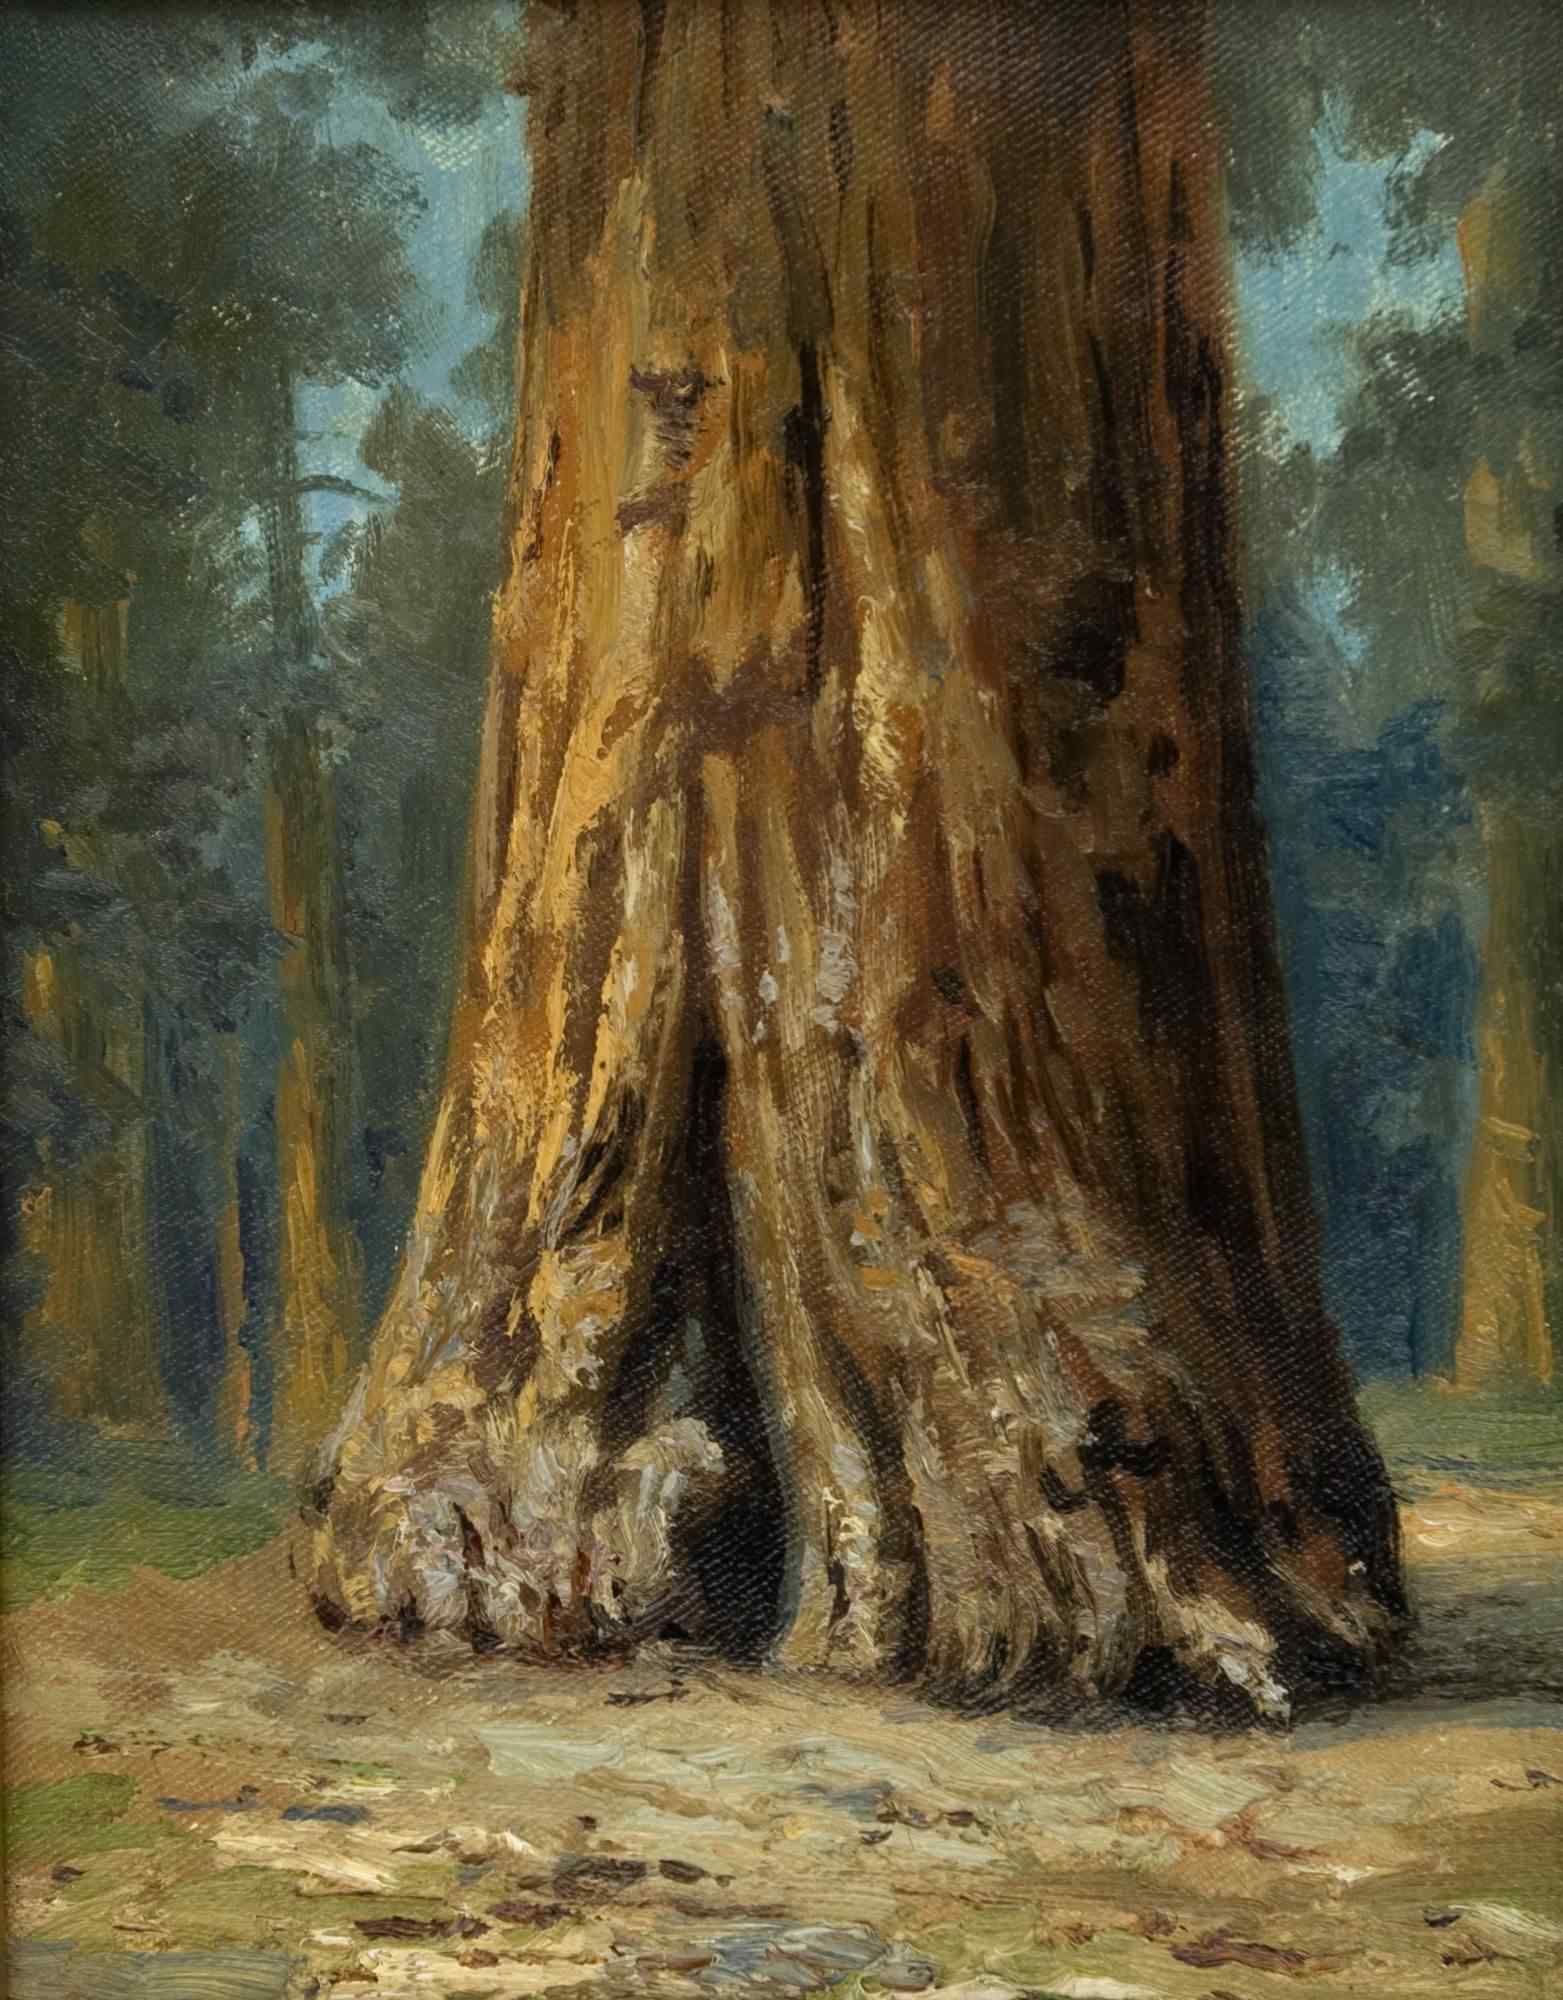 Portrait of Mariposa Grove - Base of Sequois Gigantia